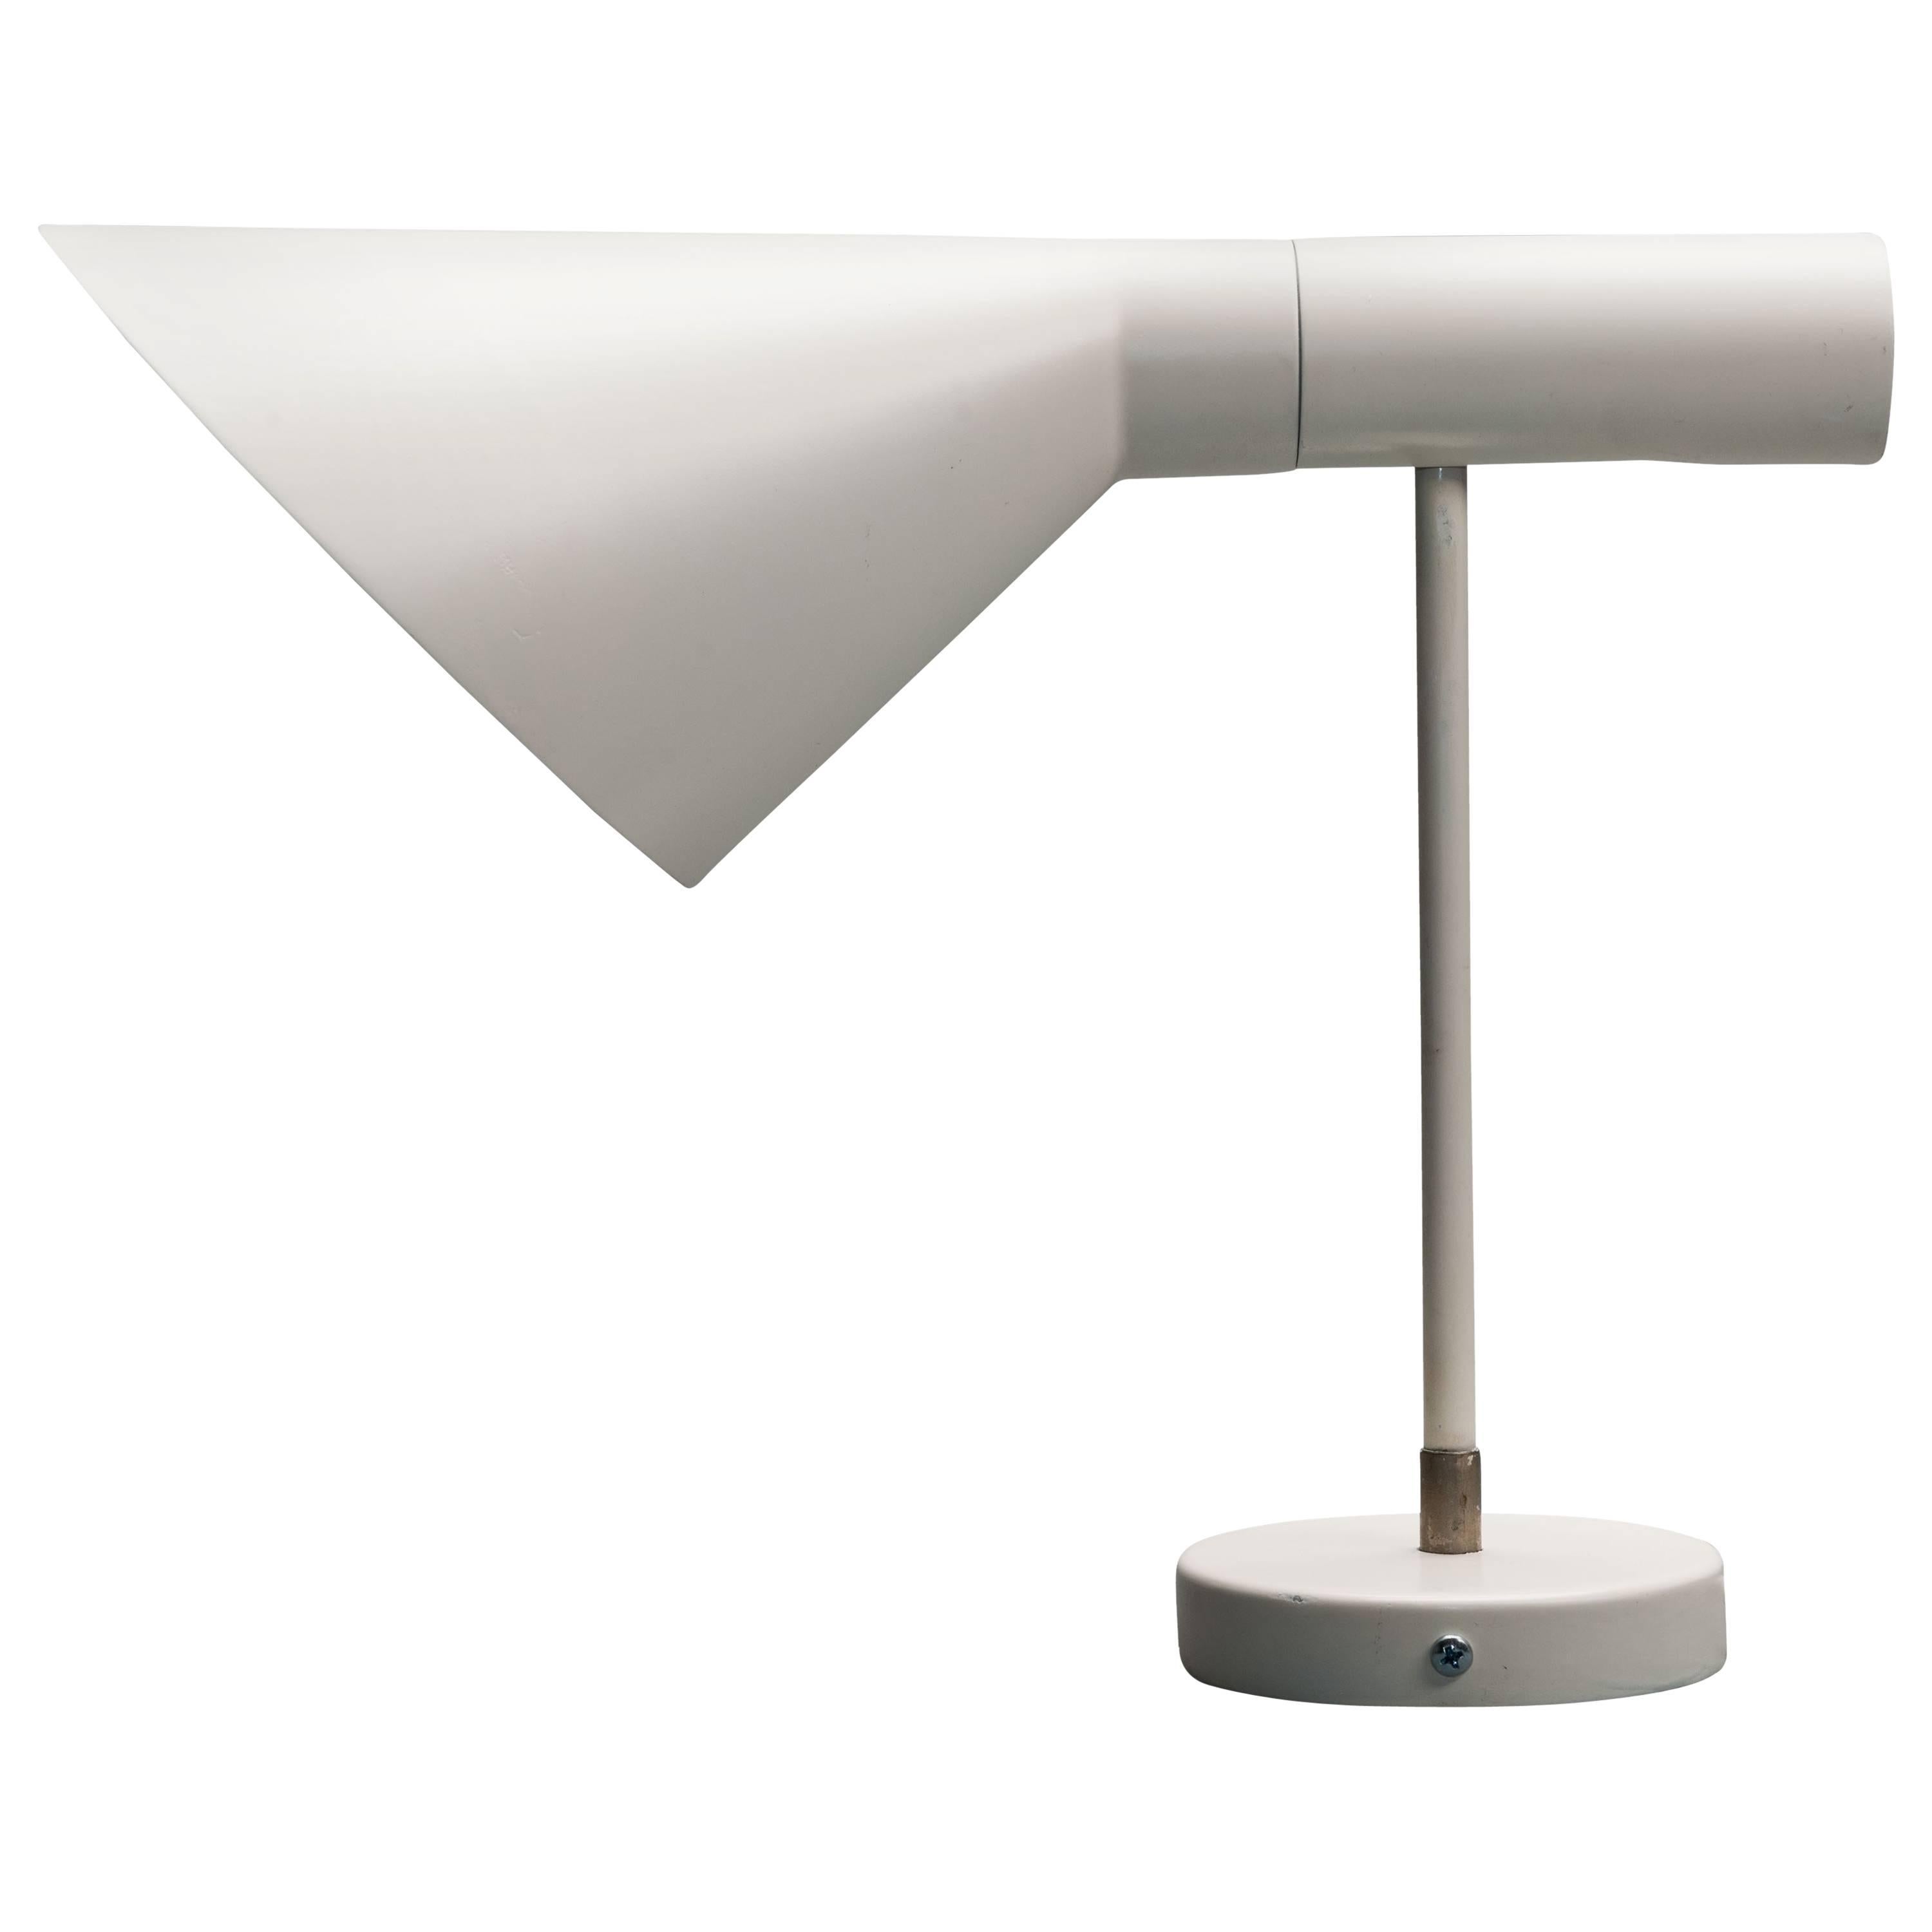 Early Aj Visor Wall Lamp by Arne Jacobsen for Louis Poulsen